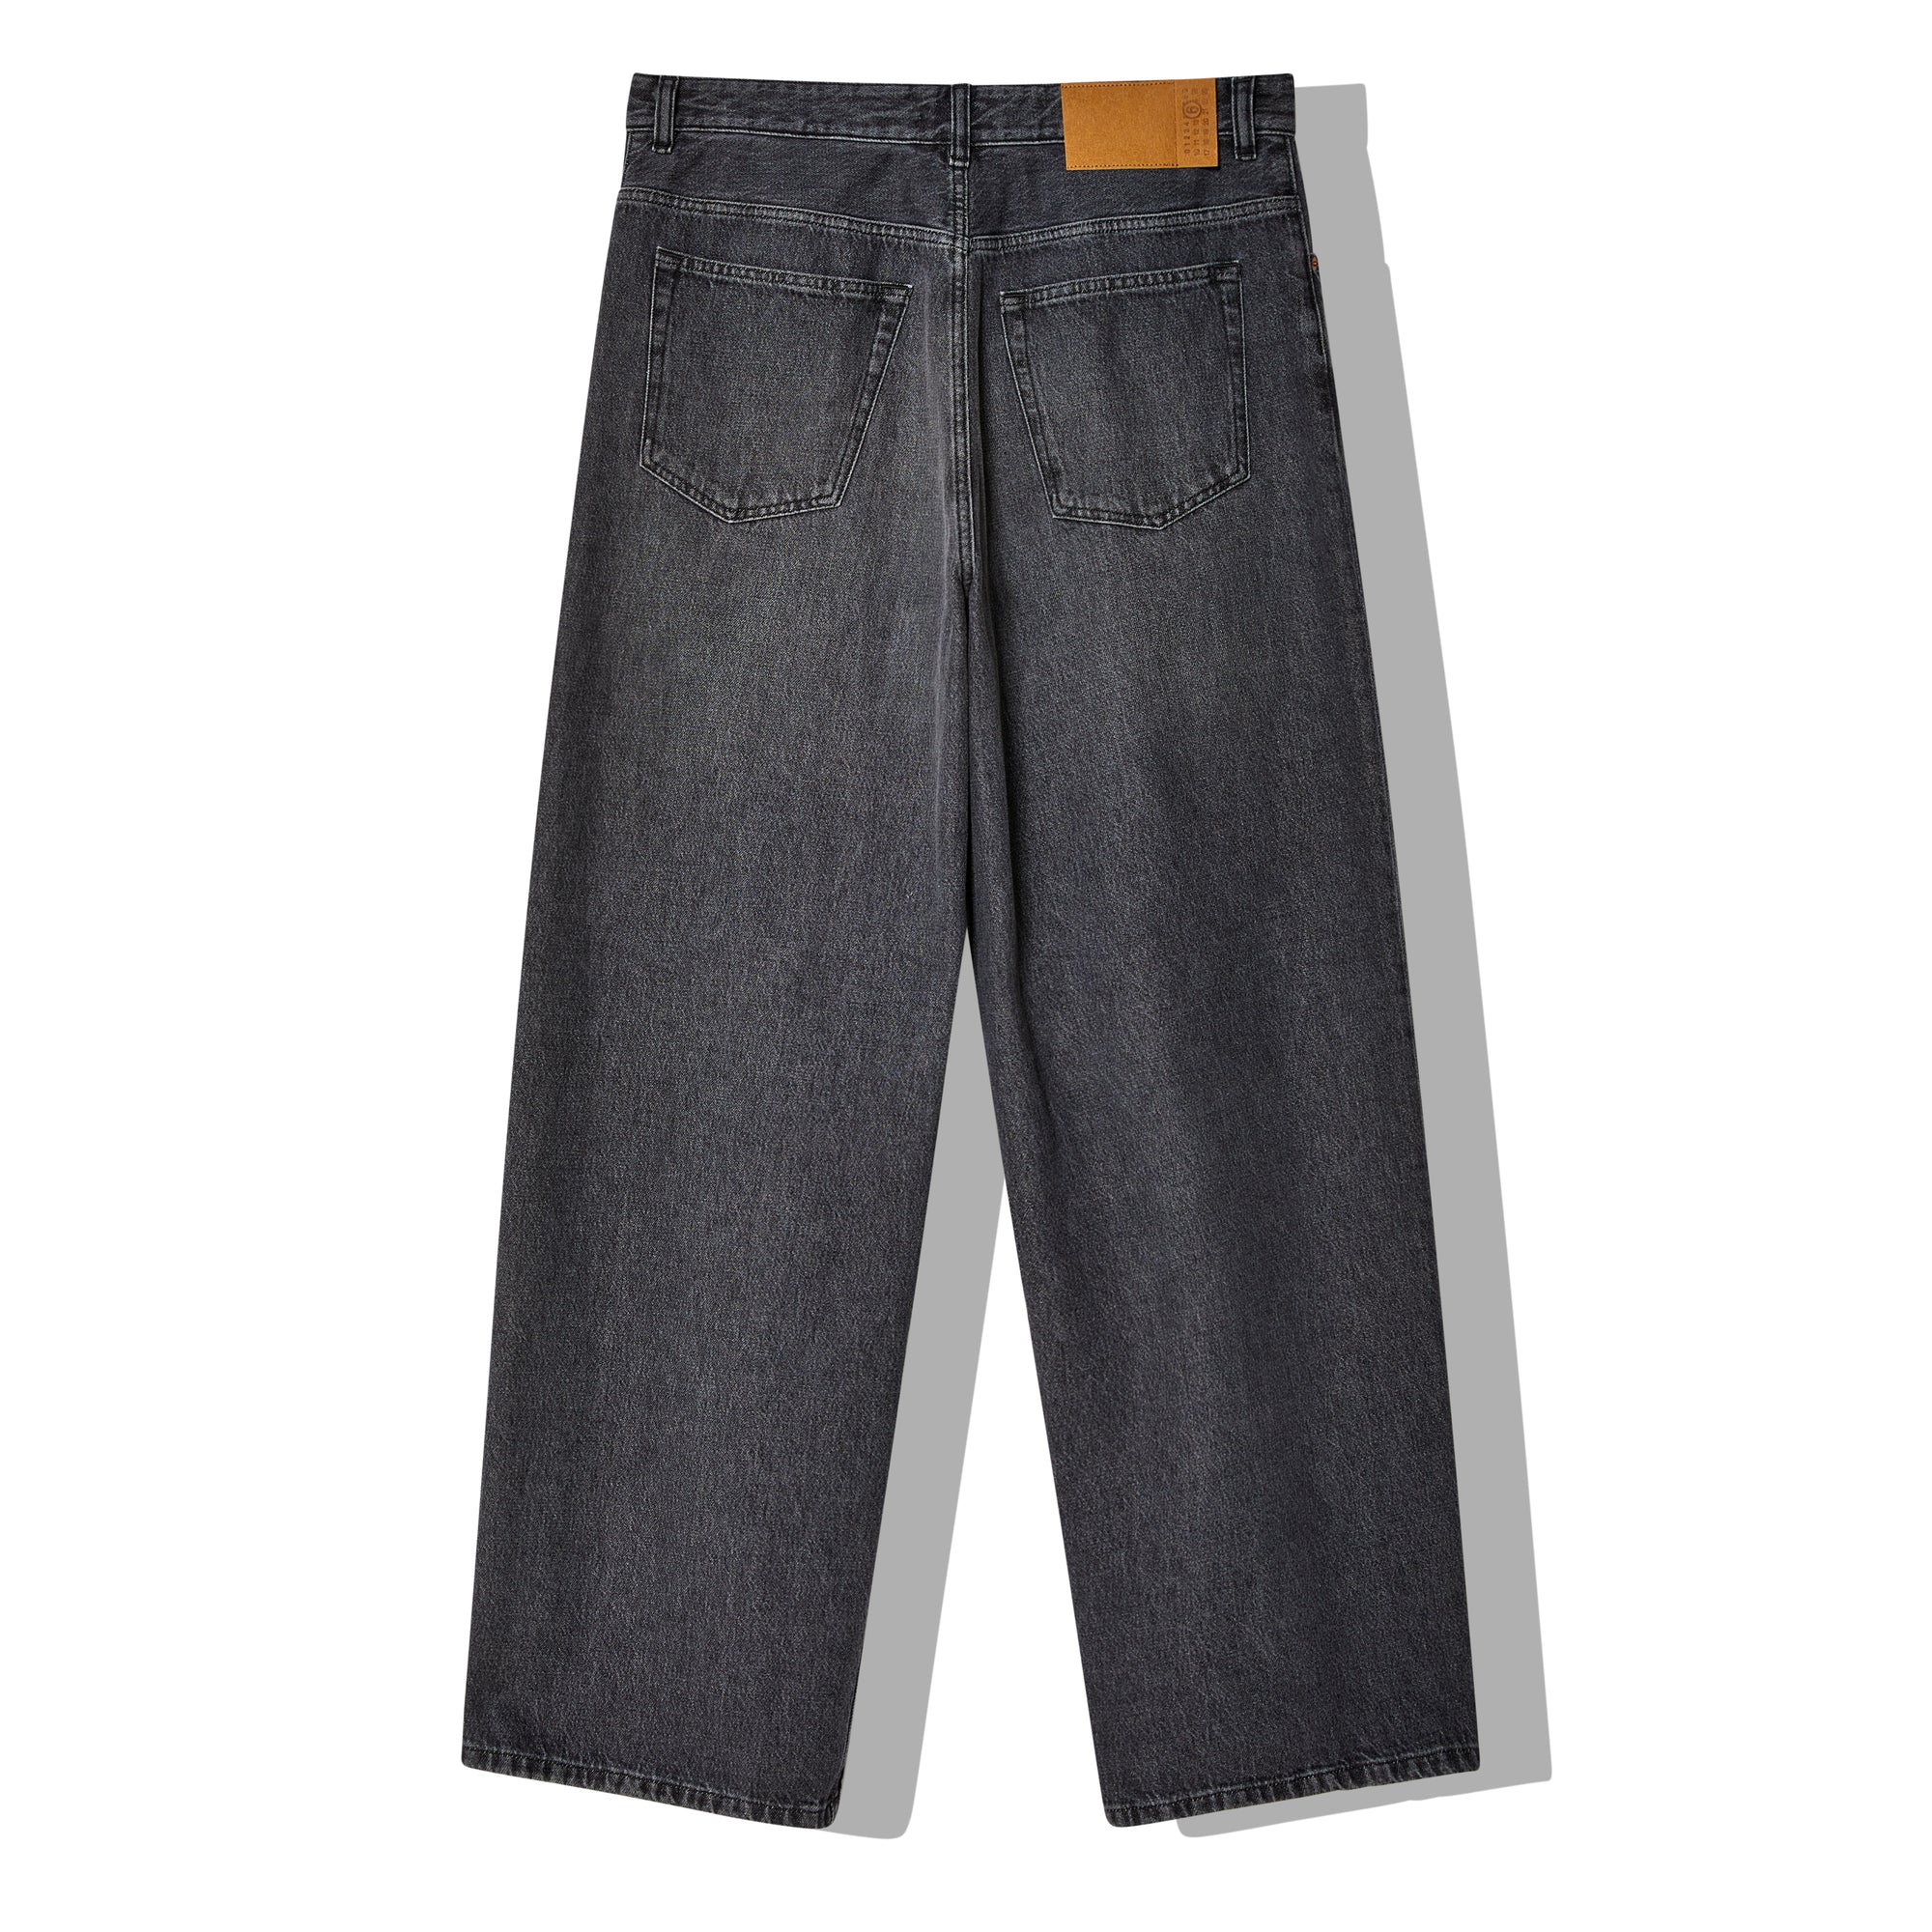 MM6 Maison Margiela Pants Five Pockets in Black Denim Regular